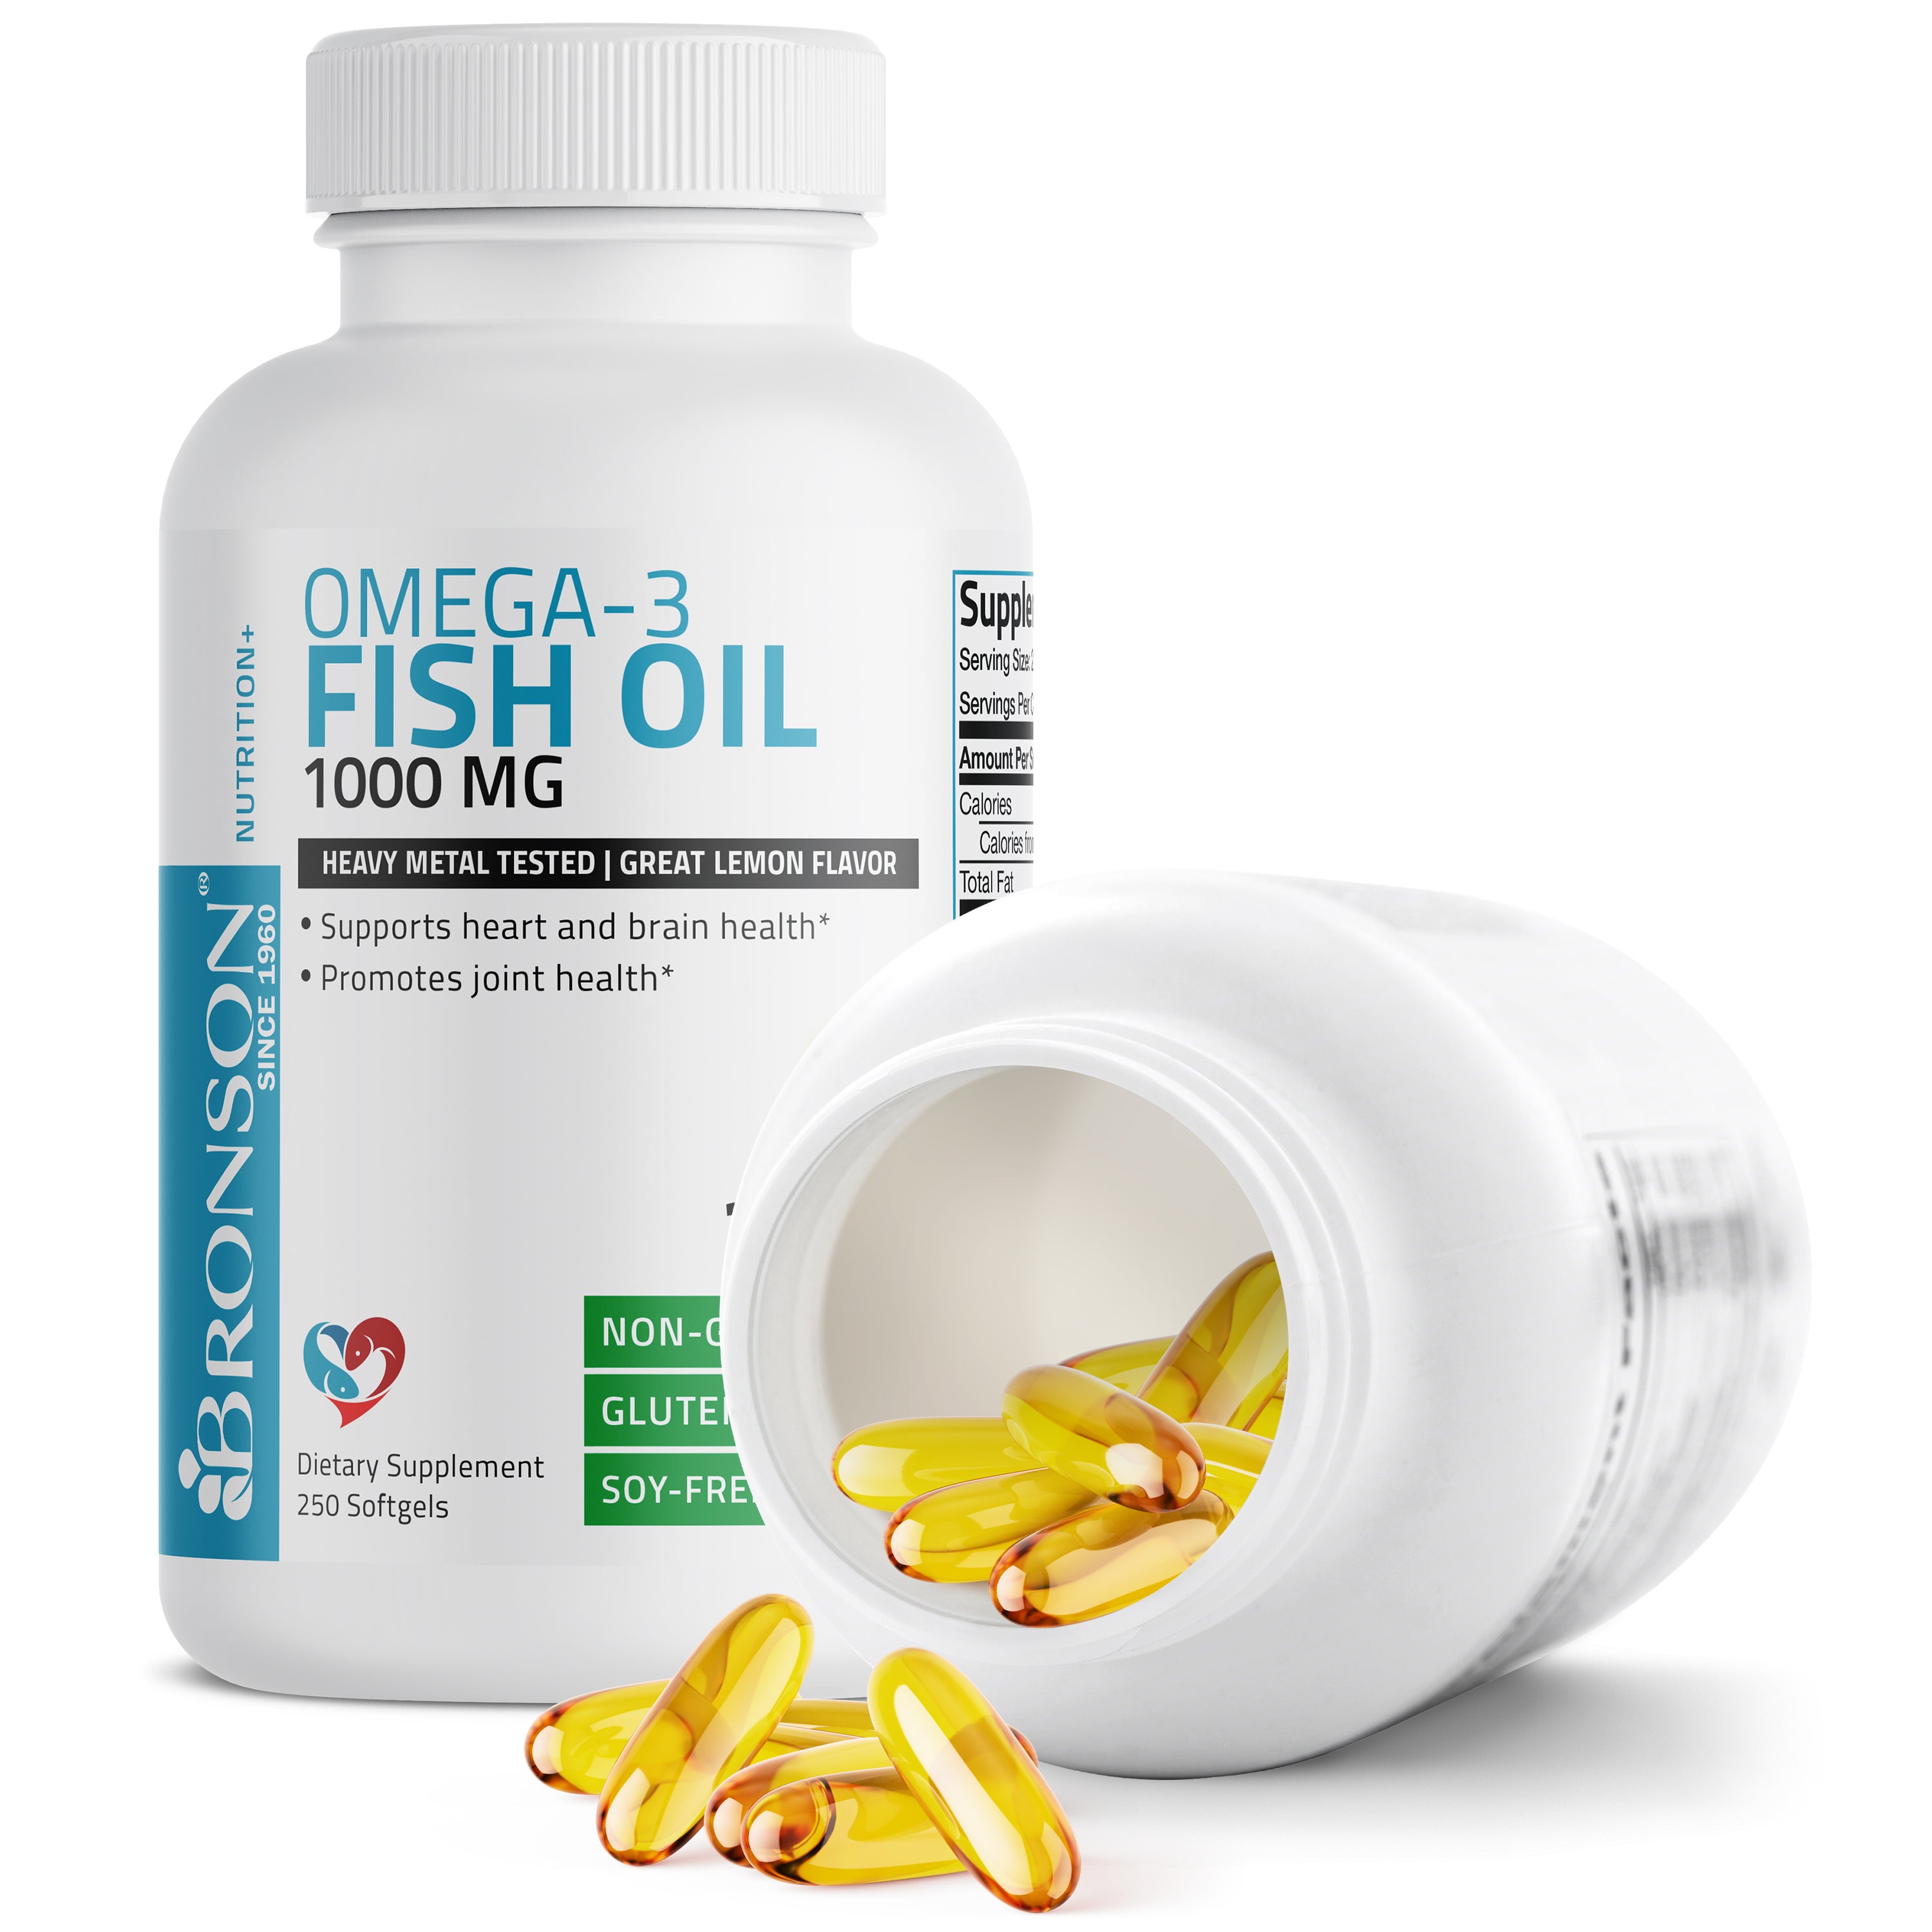 Omega-3 Fish Oil  EPA & DHA - 1,000 mg - 250 Softgels view 4 of 6